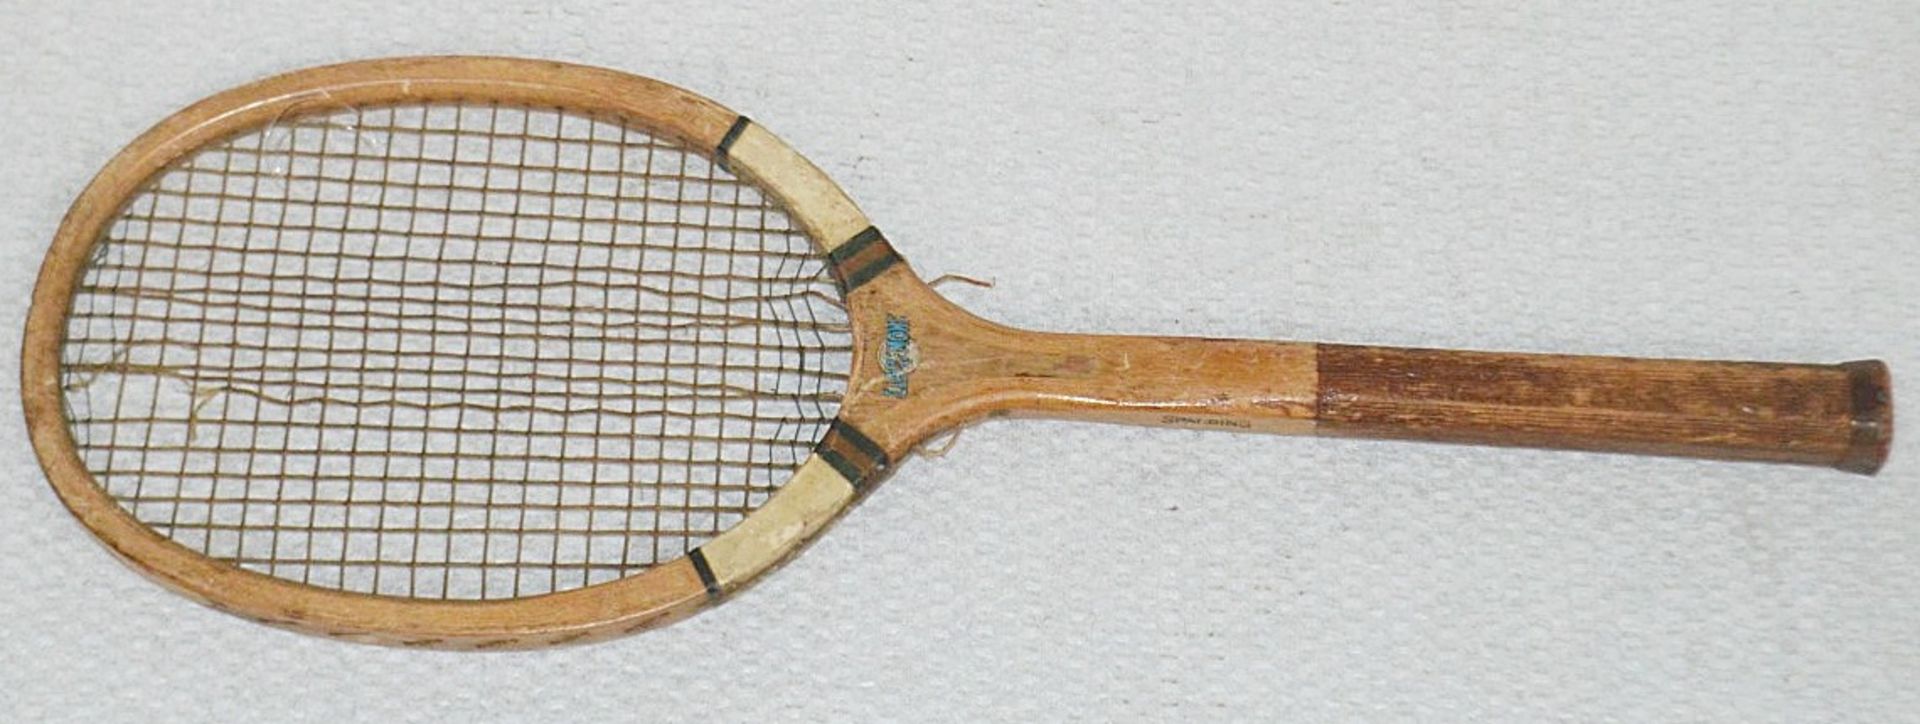 5 x Assorted Vintage Tennis Rackets - Ex-Display Props - Average Length: 69cm - Ref: HAR243 GIT - - Image 9 of 12